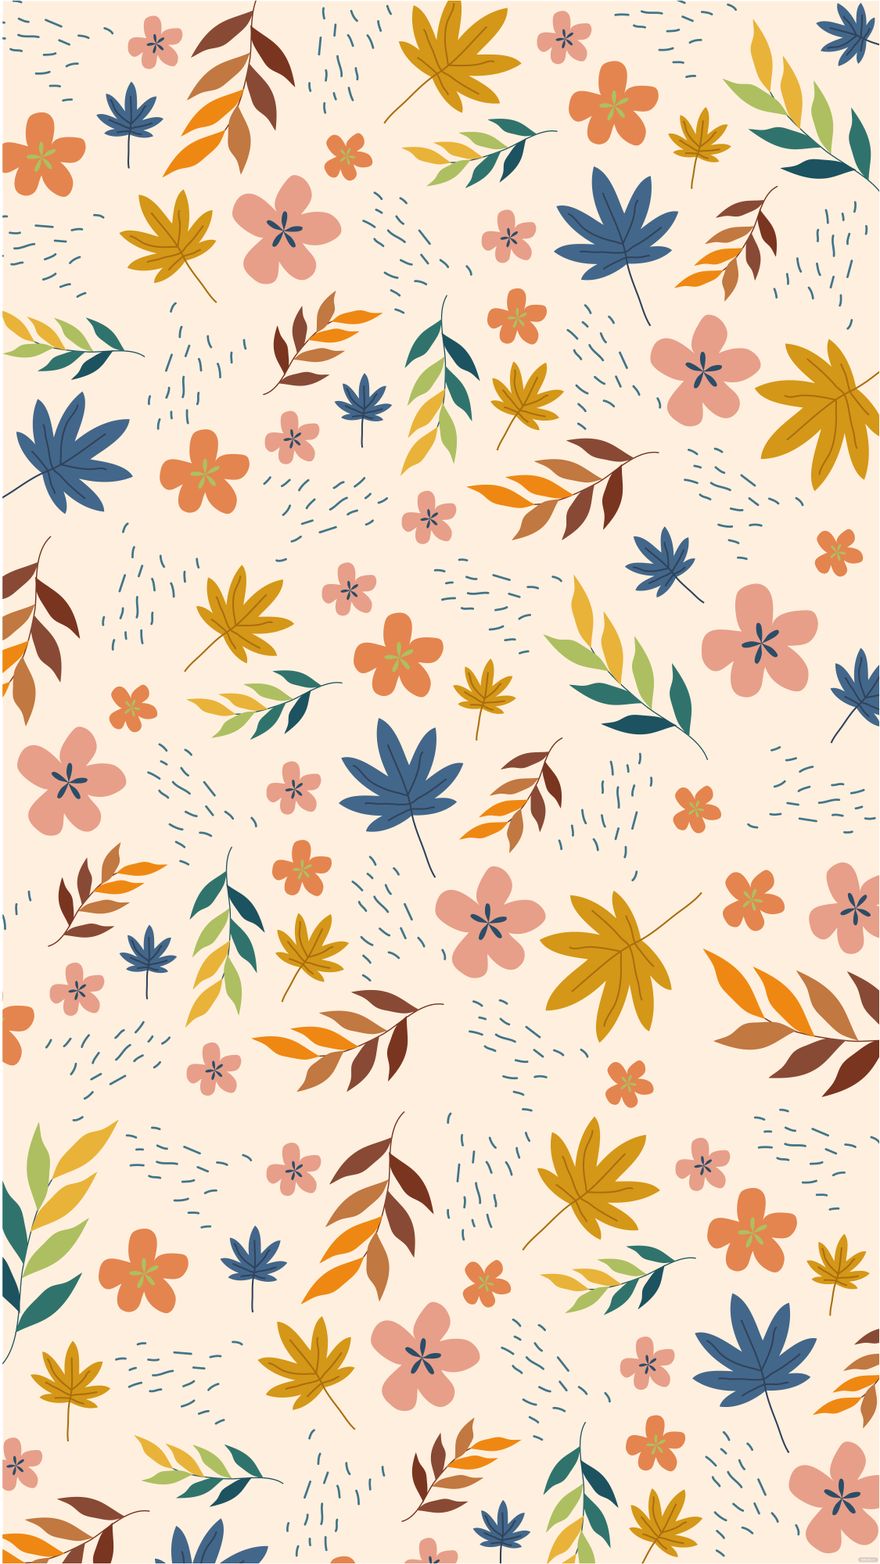 Autumn Floral Background Template in Illustrator, EPS, SVG, JPG